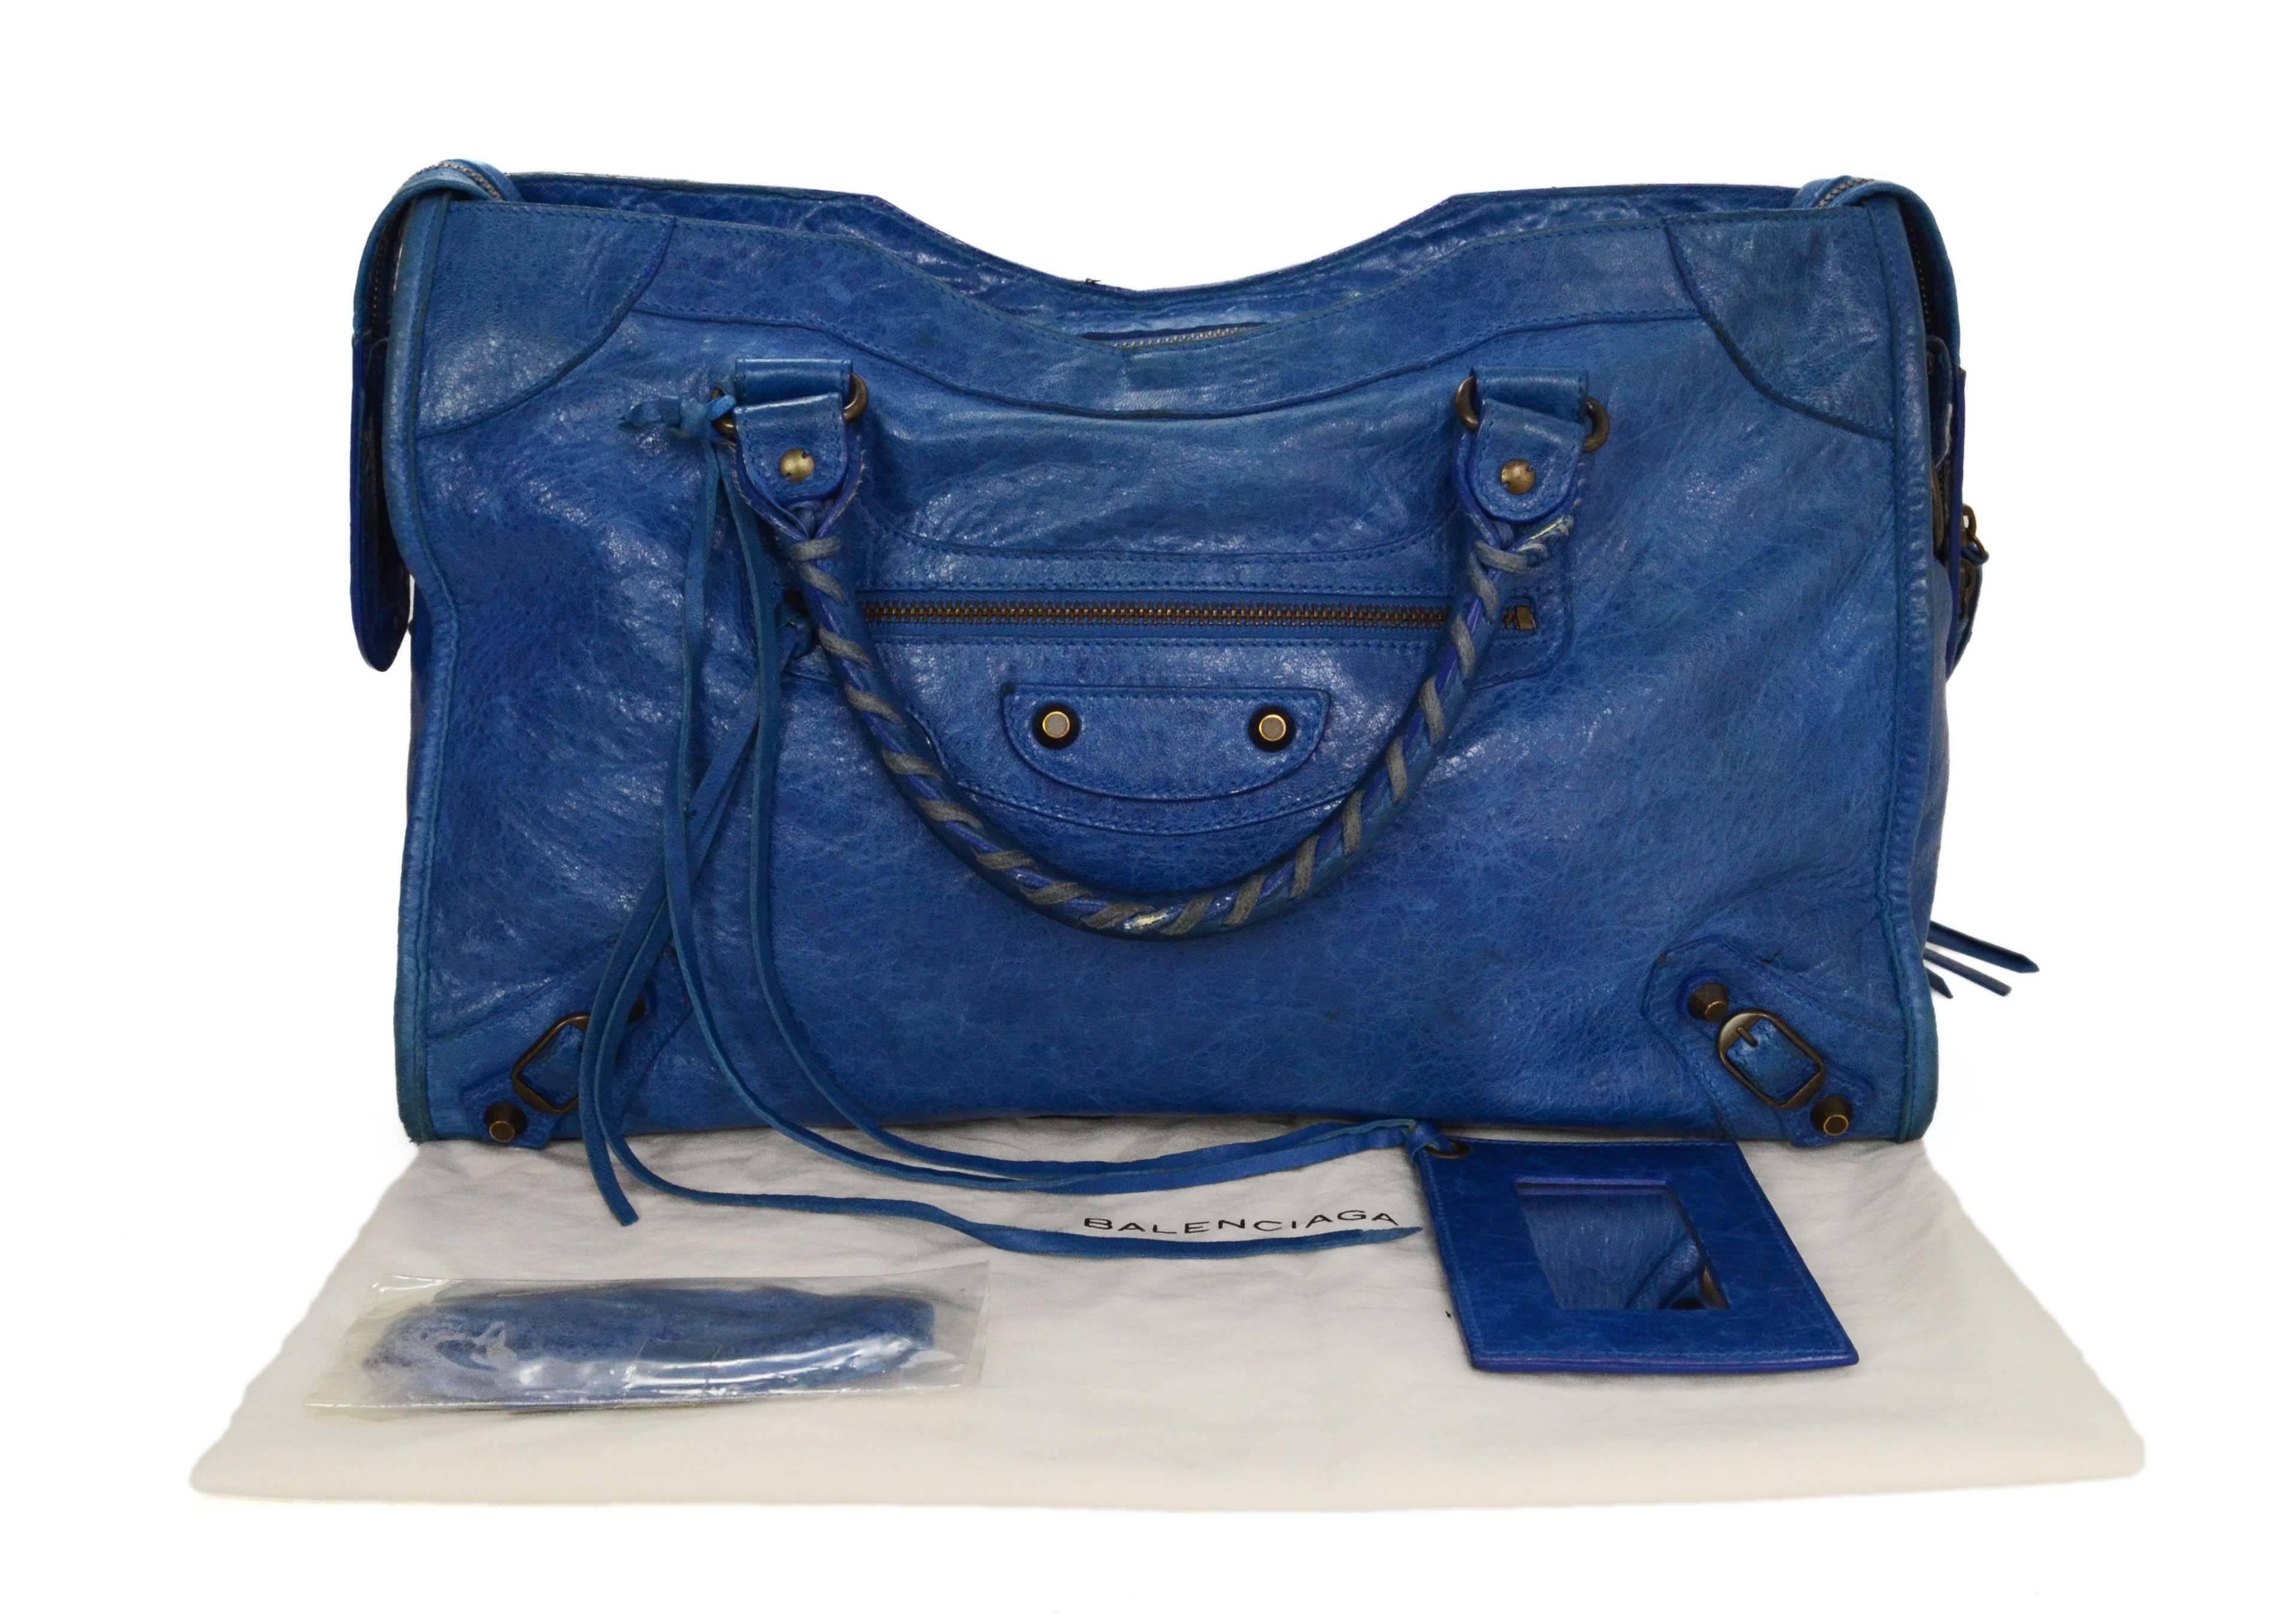 Balenciaga Blue Distressed Leather “City” Bag BHW 2